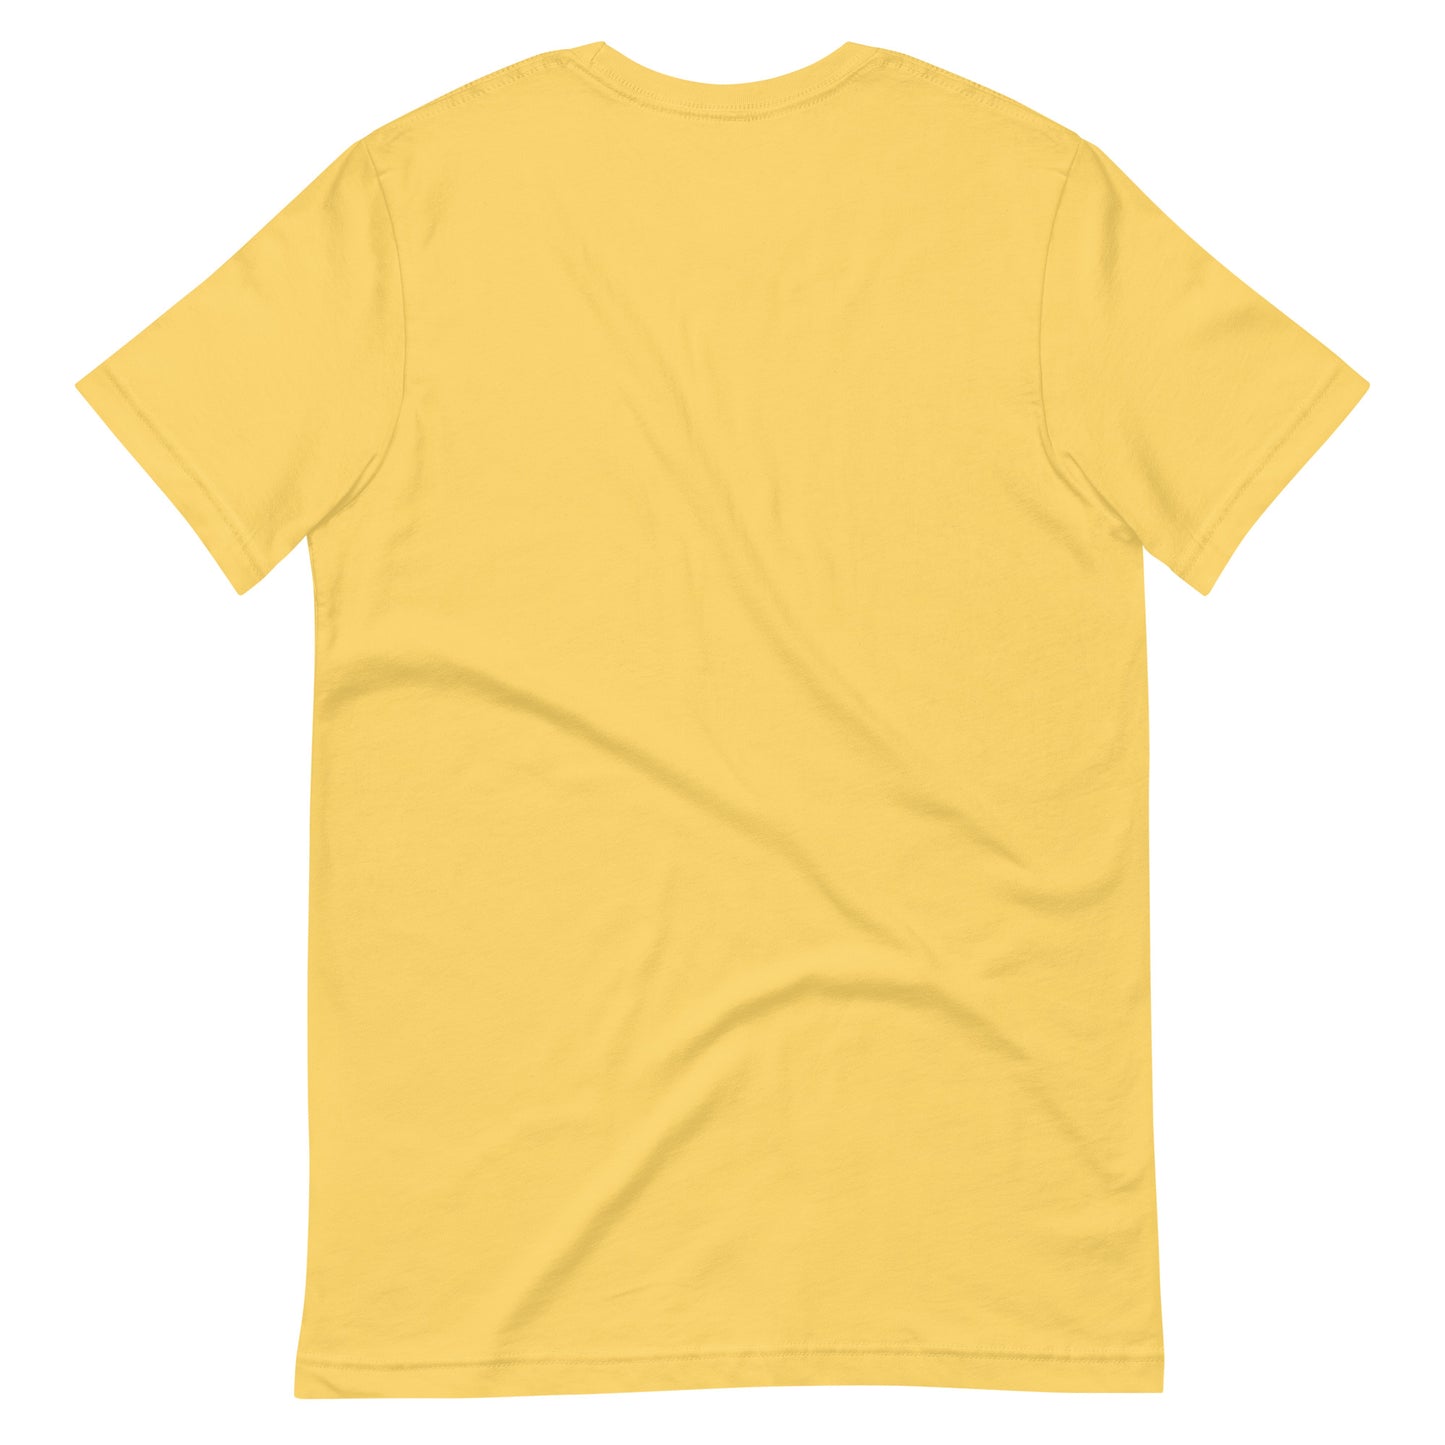 Bloom Unisex T-Shirt